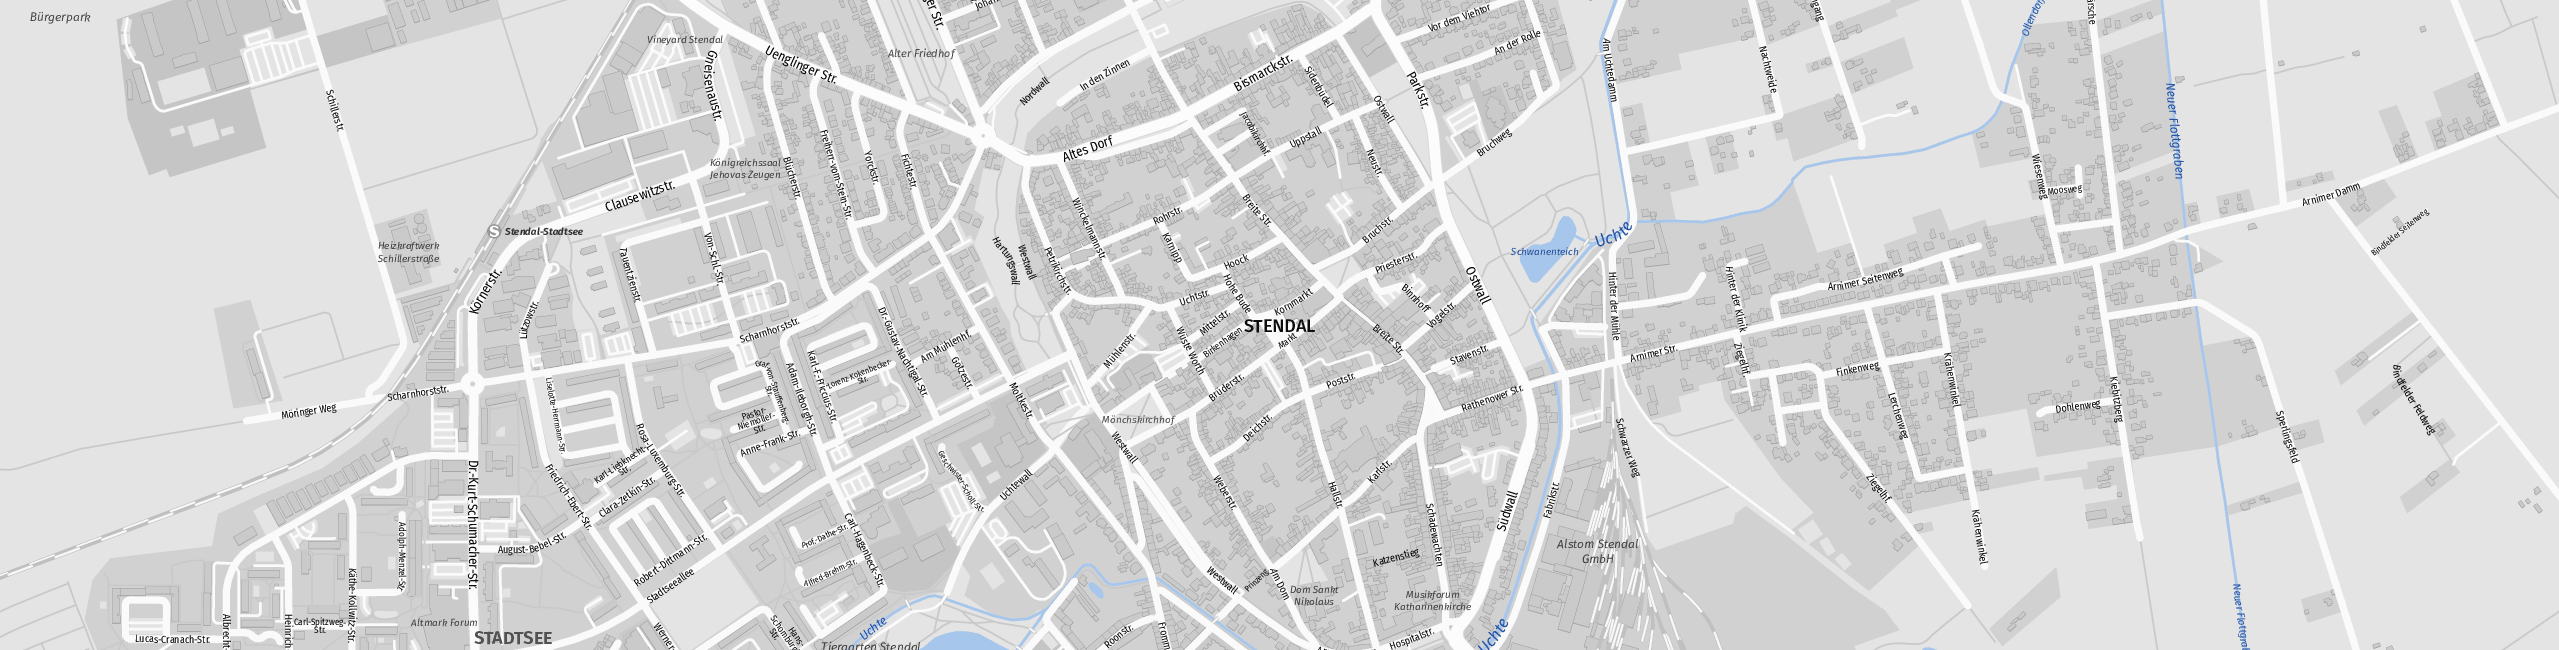 Stadtplan Stendal zum Downloaden.